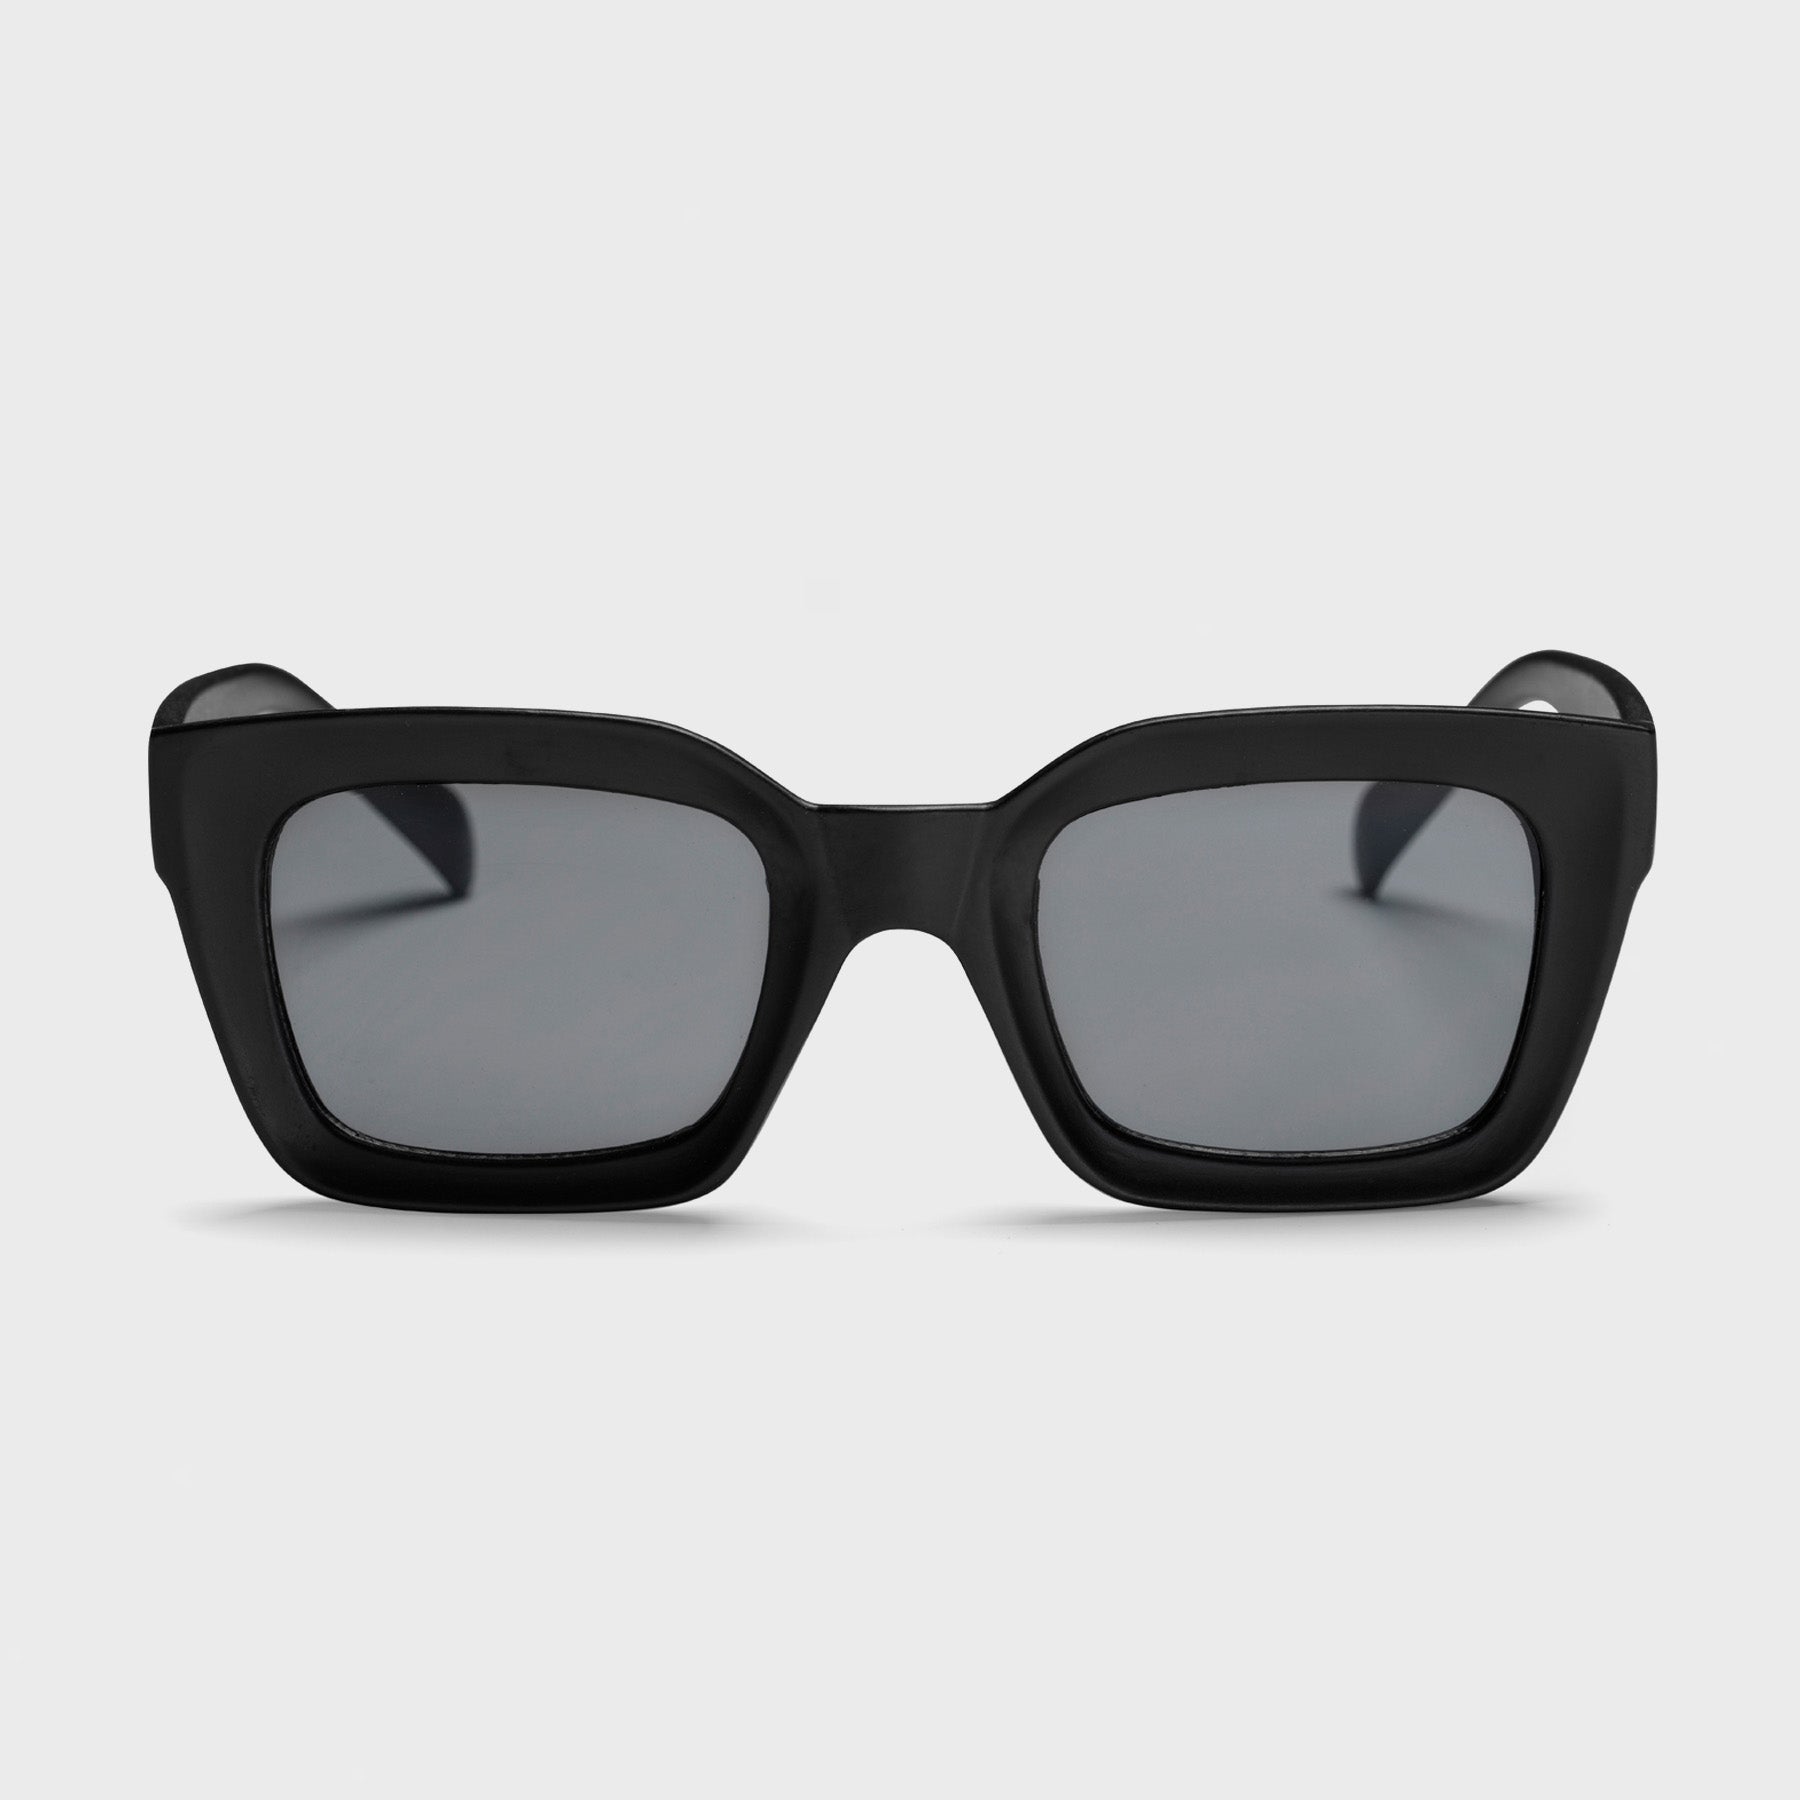 CHPO - Anna Sunglasses - Black / Black